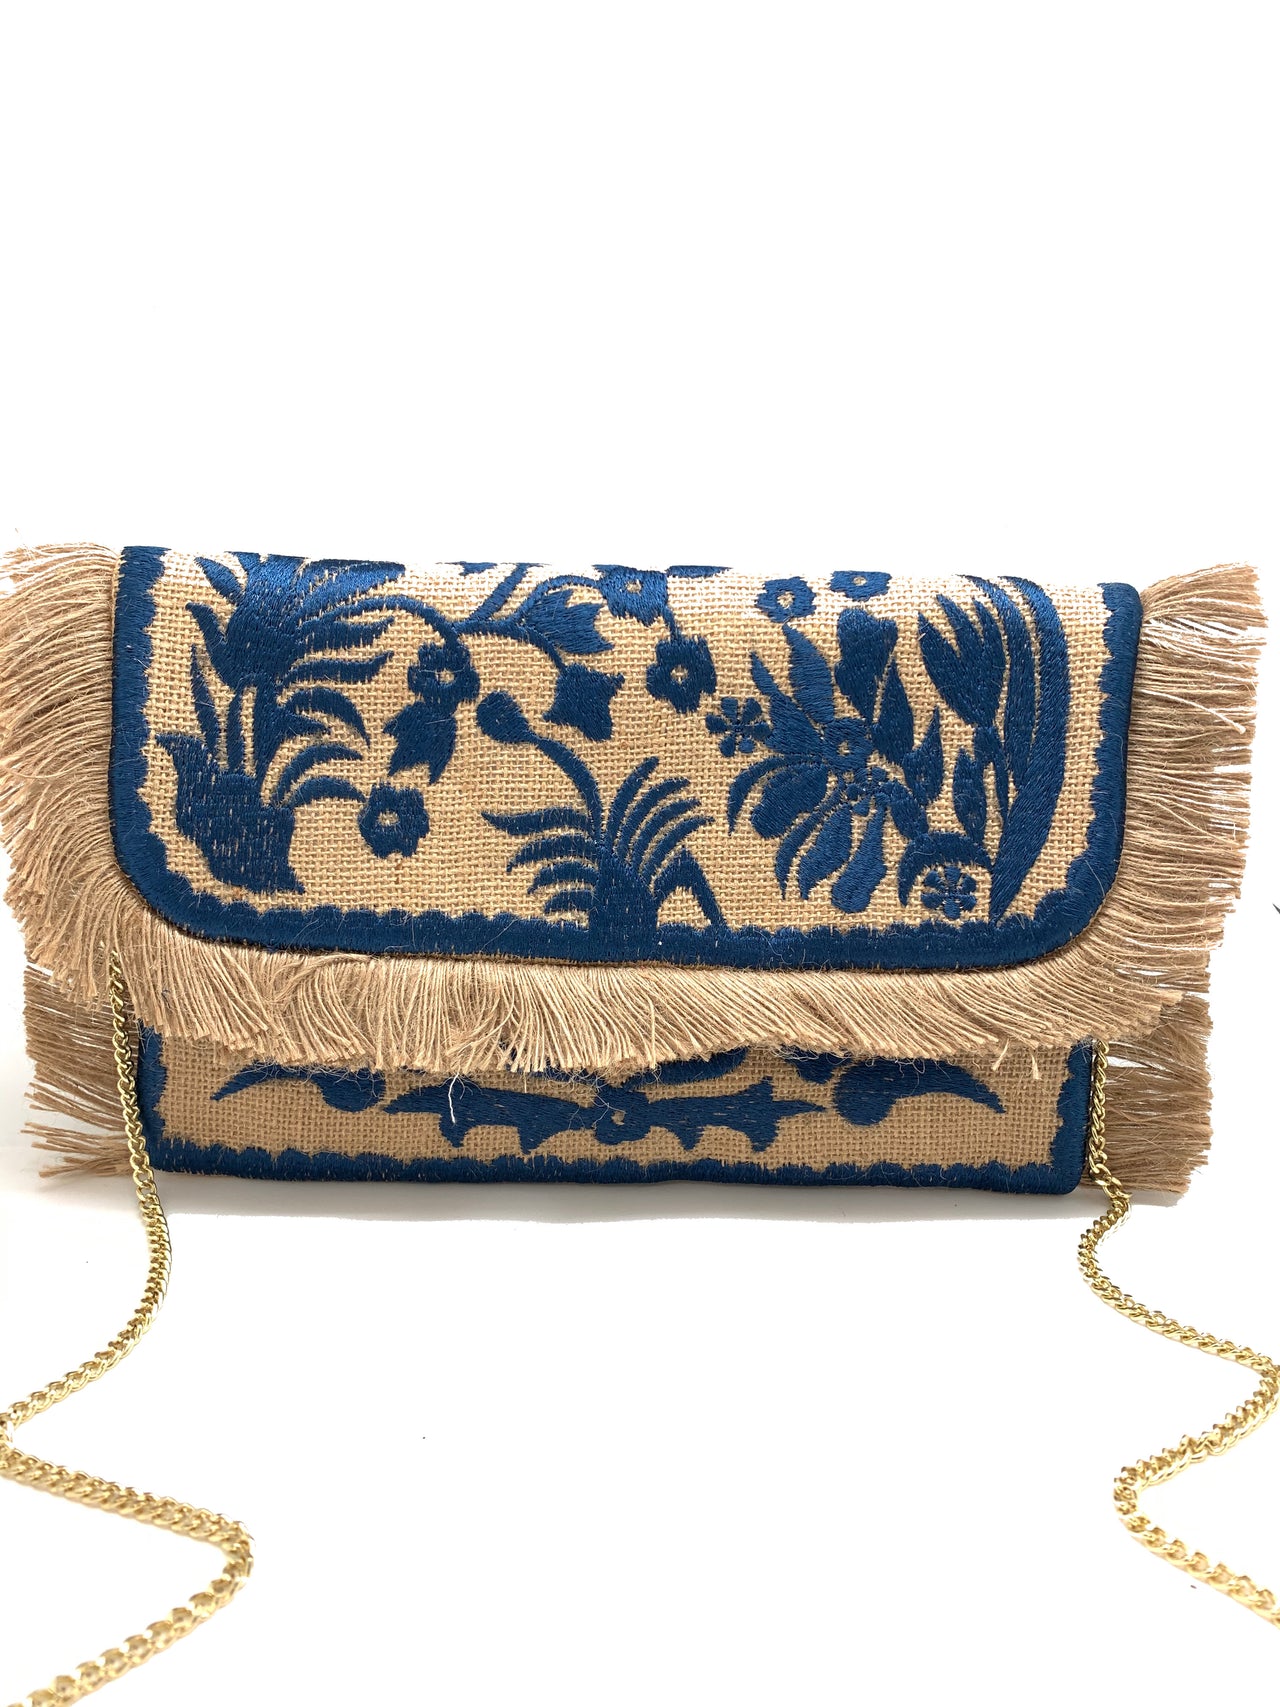 La Chic Blue Embroidered Jute Bag